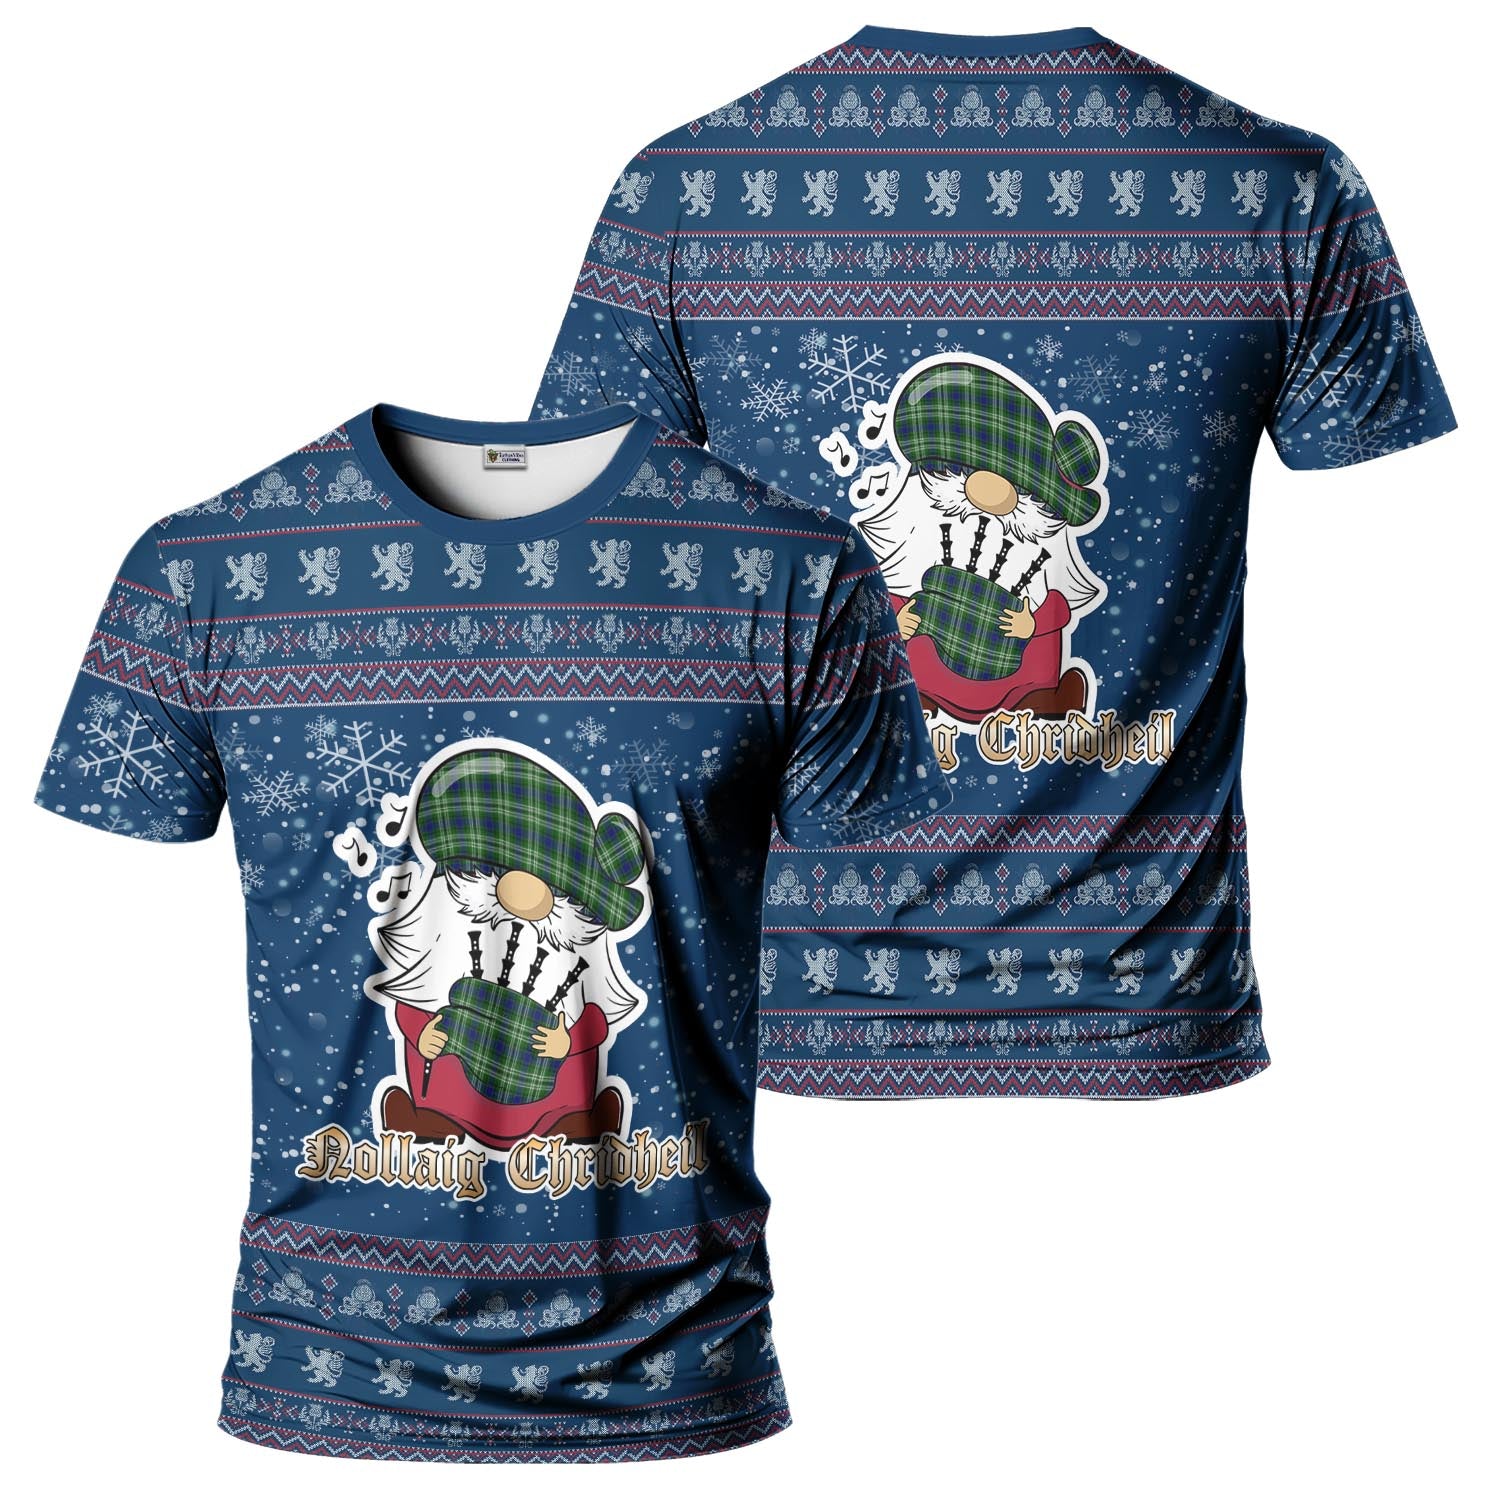 Haliburton Clan Christmas Family T-Shirt with Funny Gnome Playing Bagpipes Kid's Shirt Blue - Tartanvibesclothing